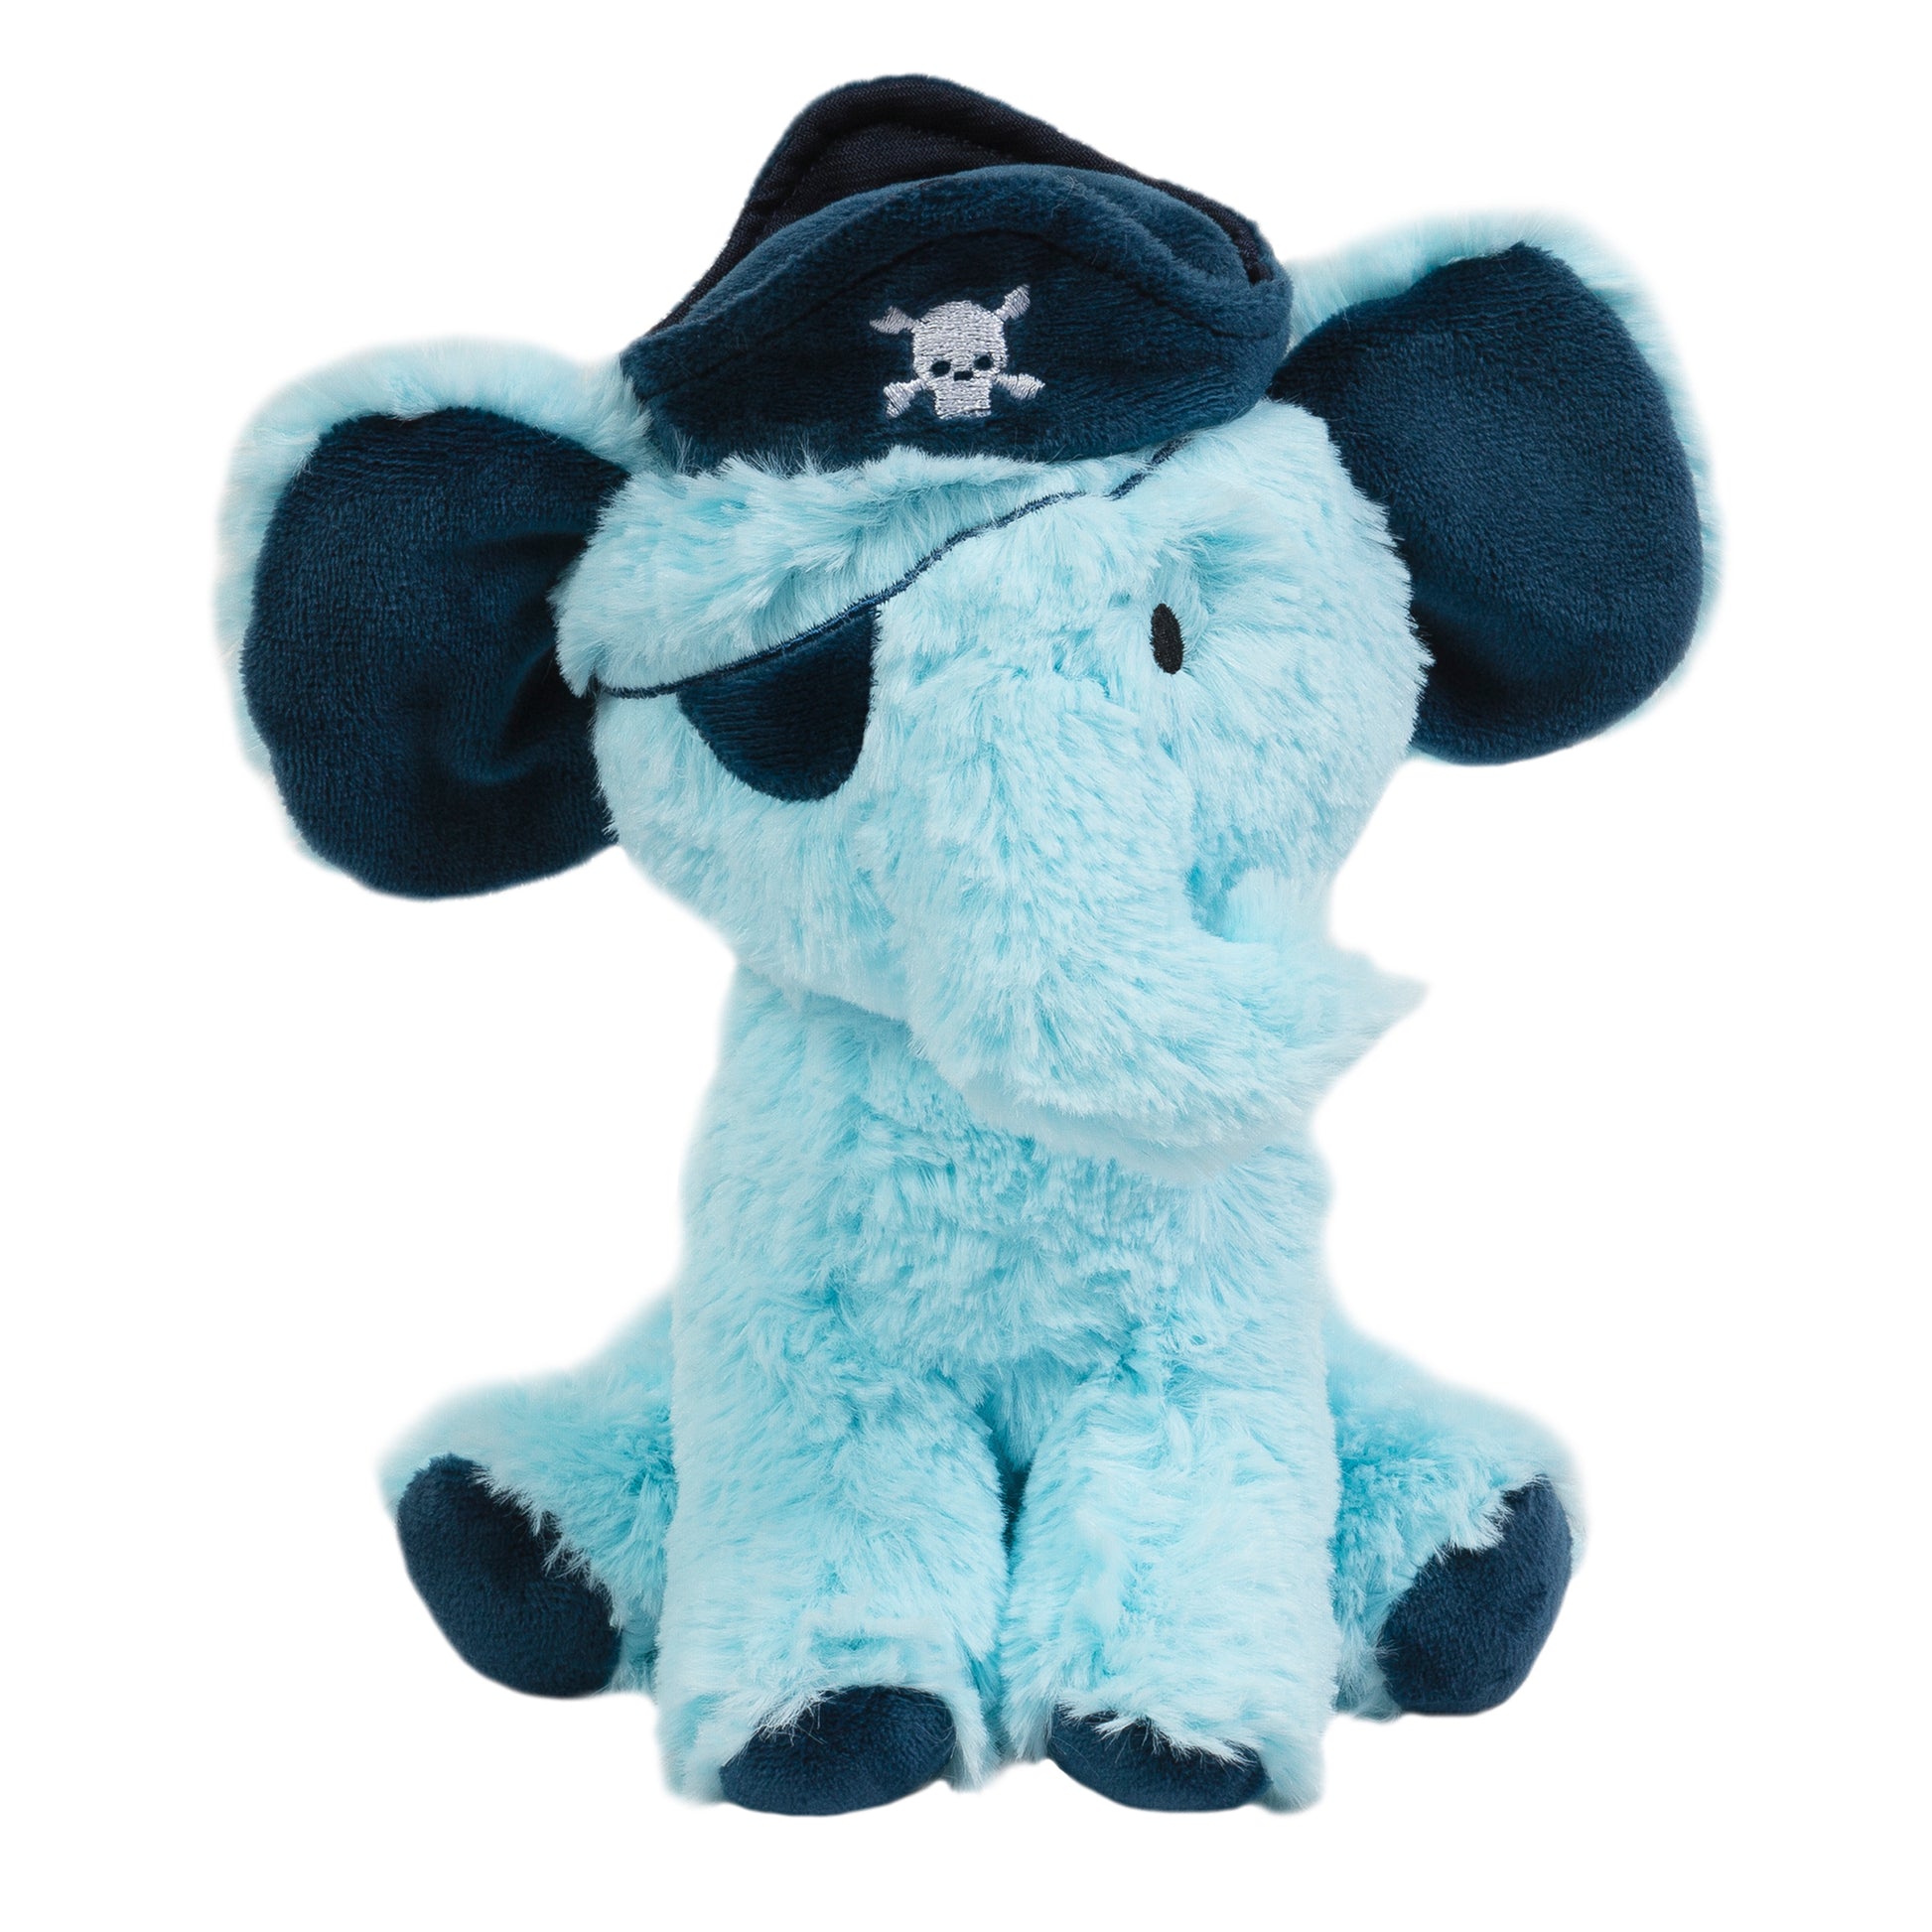 Pirate Elephant Blue Plush Toy 